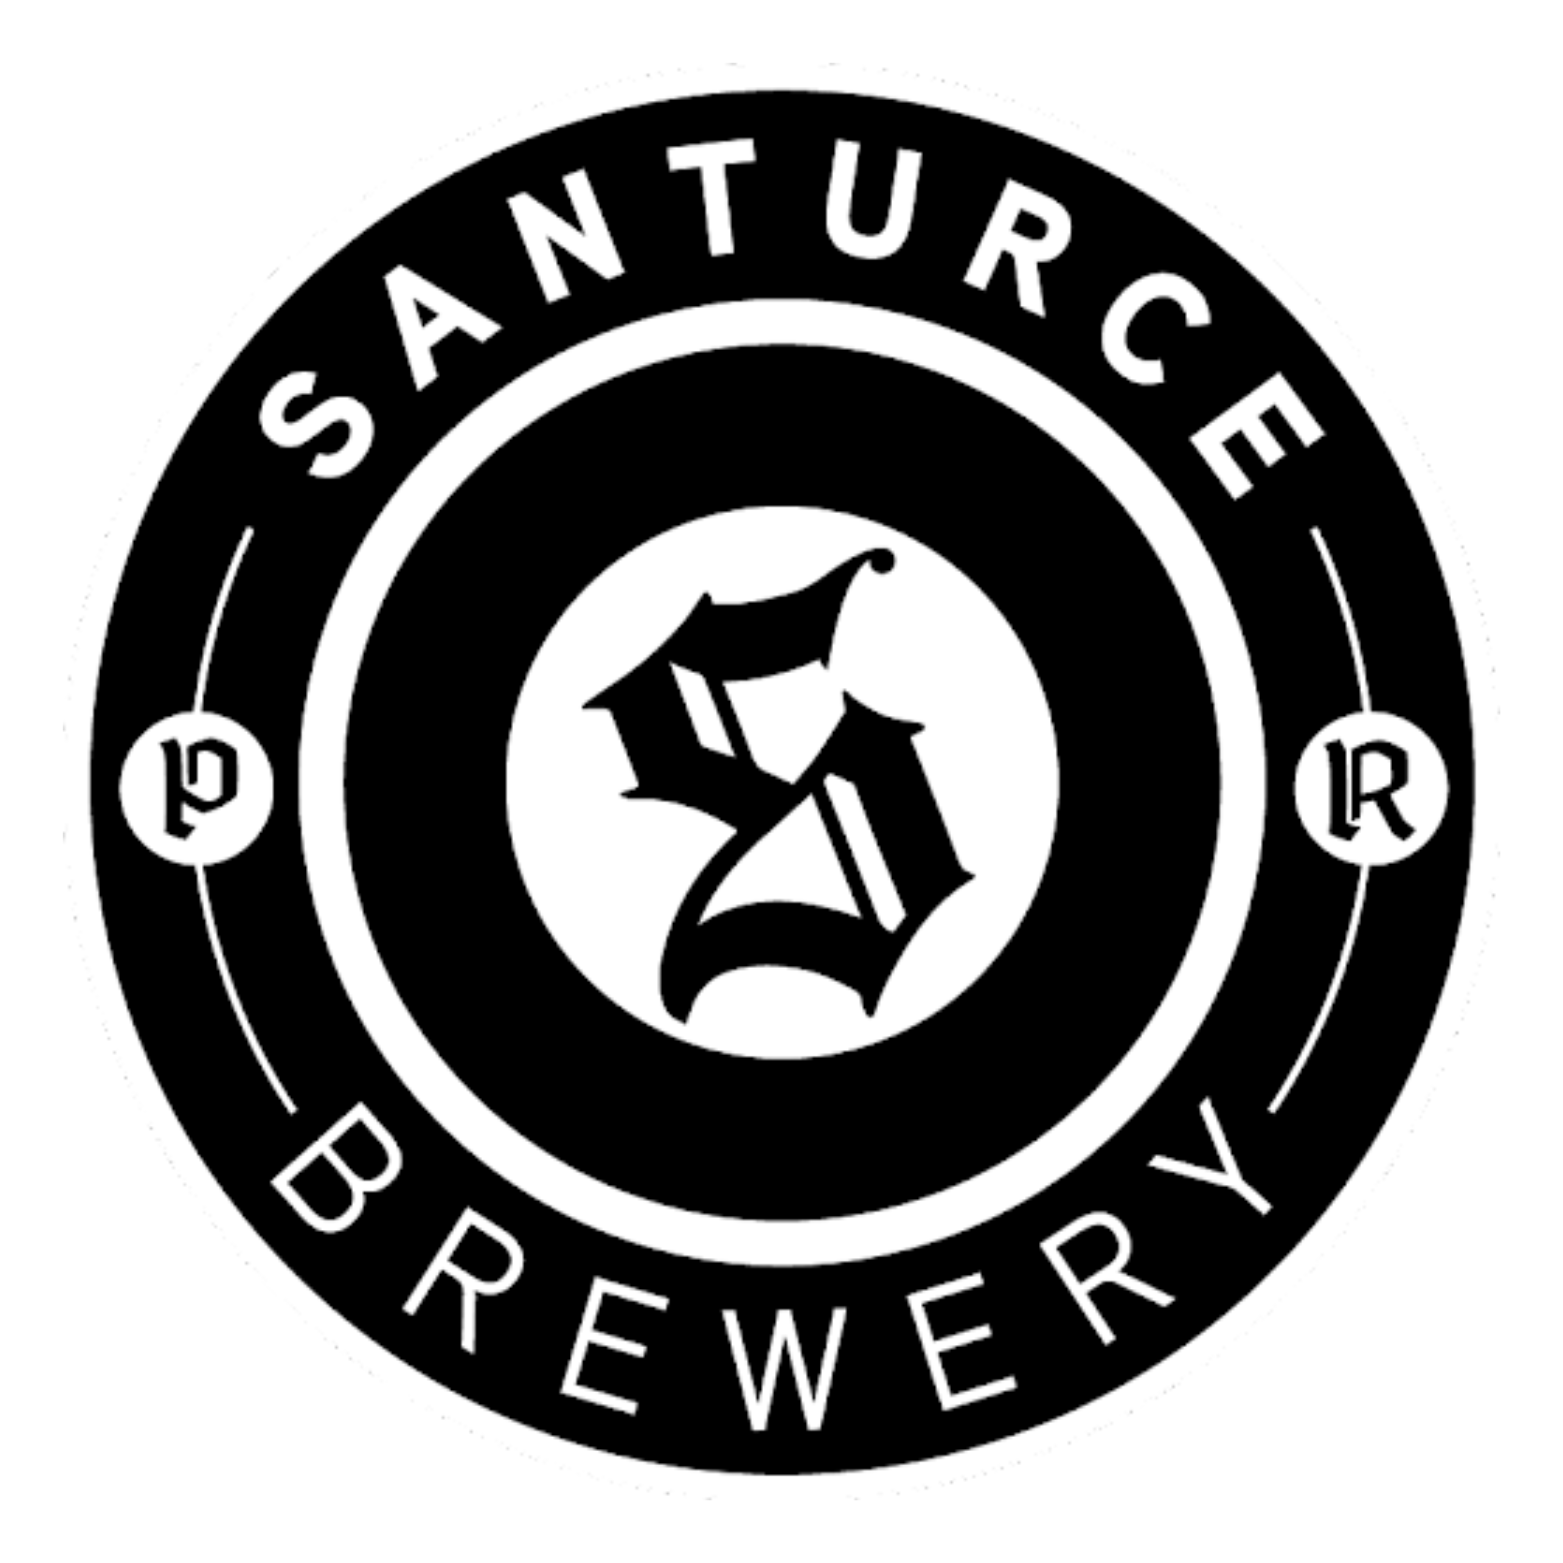 Santurce Brewery